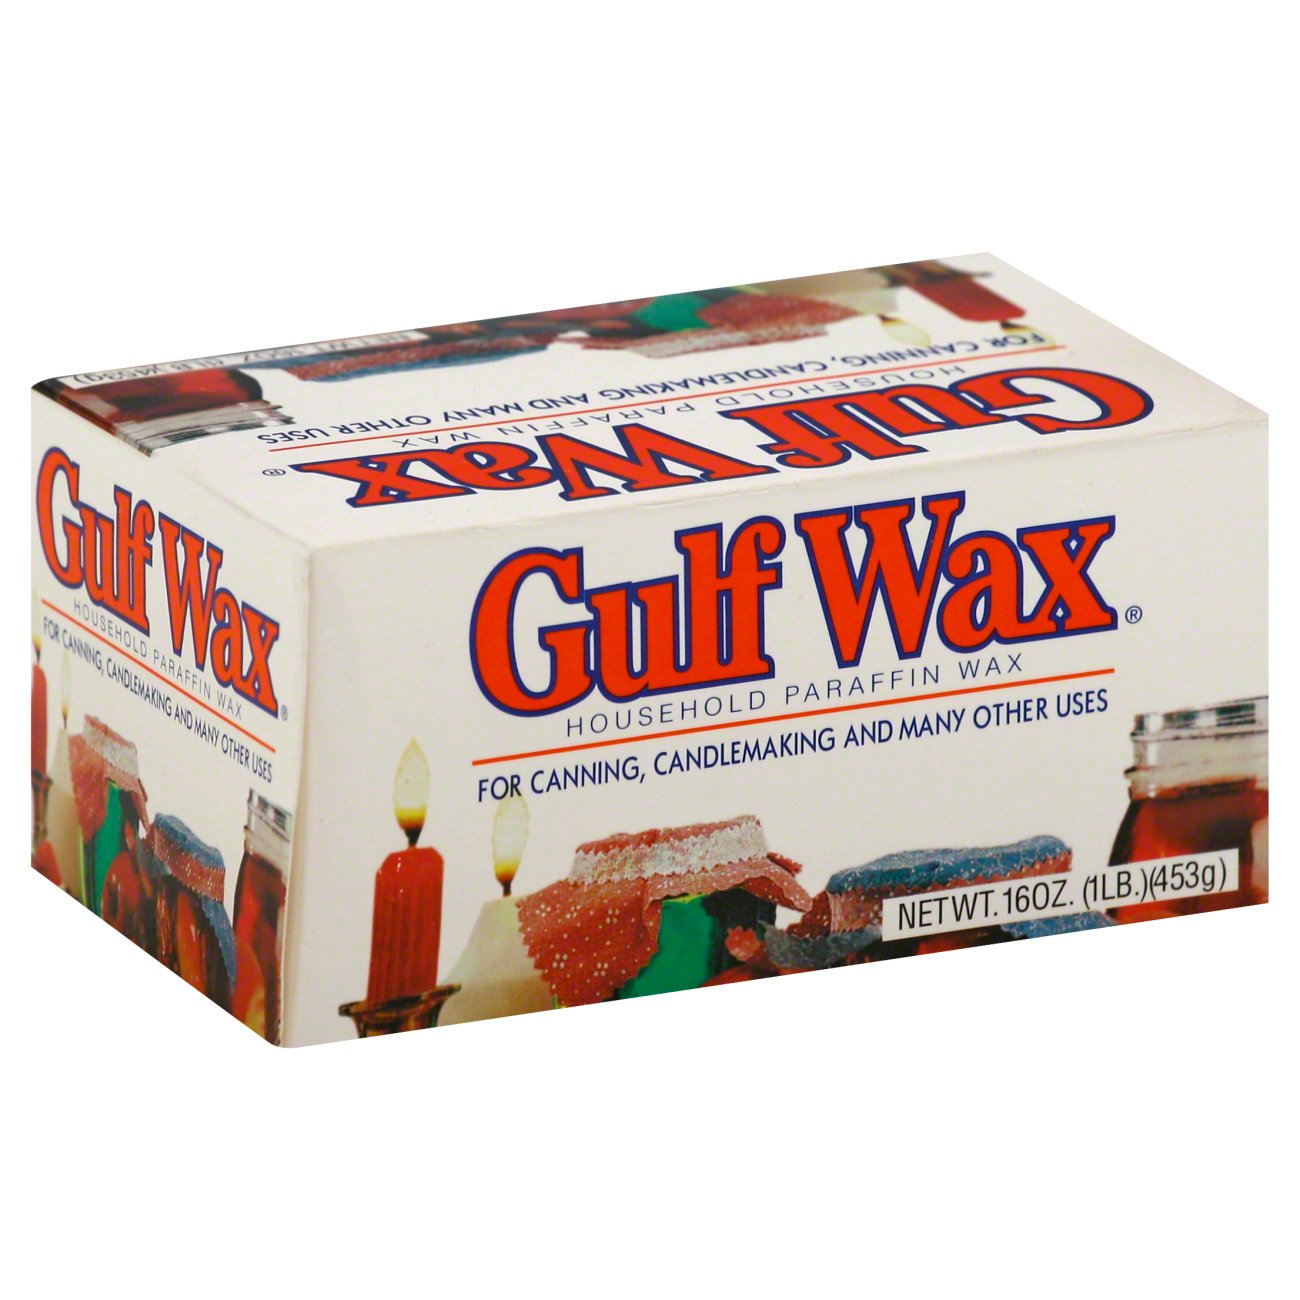 Royal Oak 203-060-005 Gulfwax Household Paraffin Wax-gulfwax Paraffin